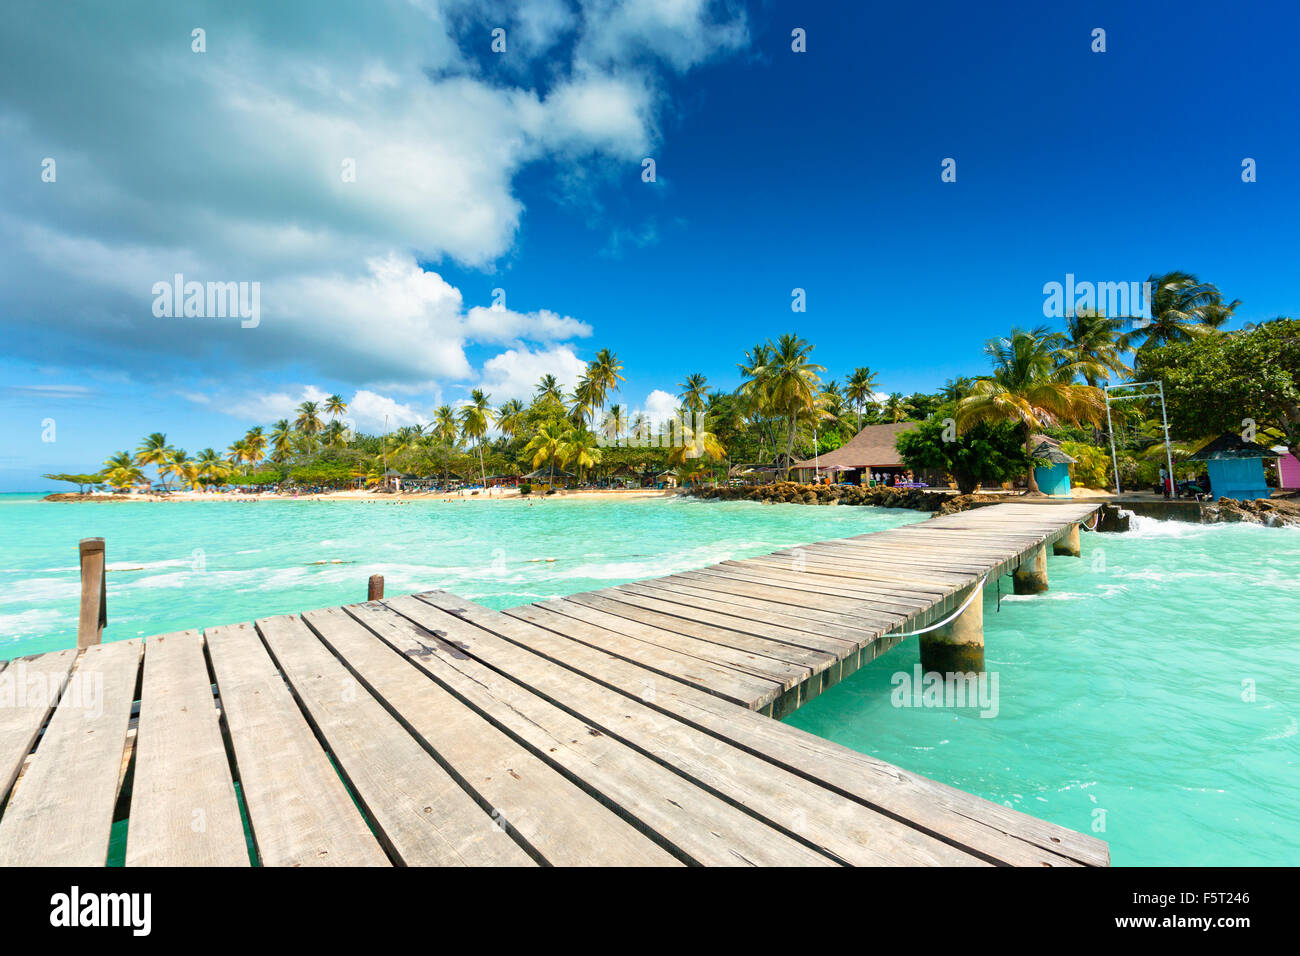 Trinidad and Tobago, Tobago, Pigeon Point, View of wooden pier and coastline Stock Photo